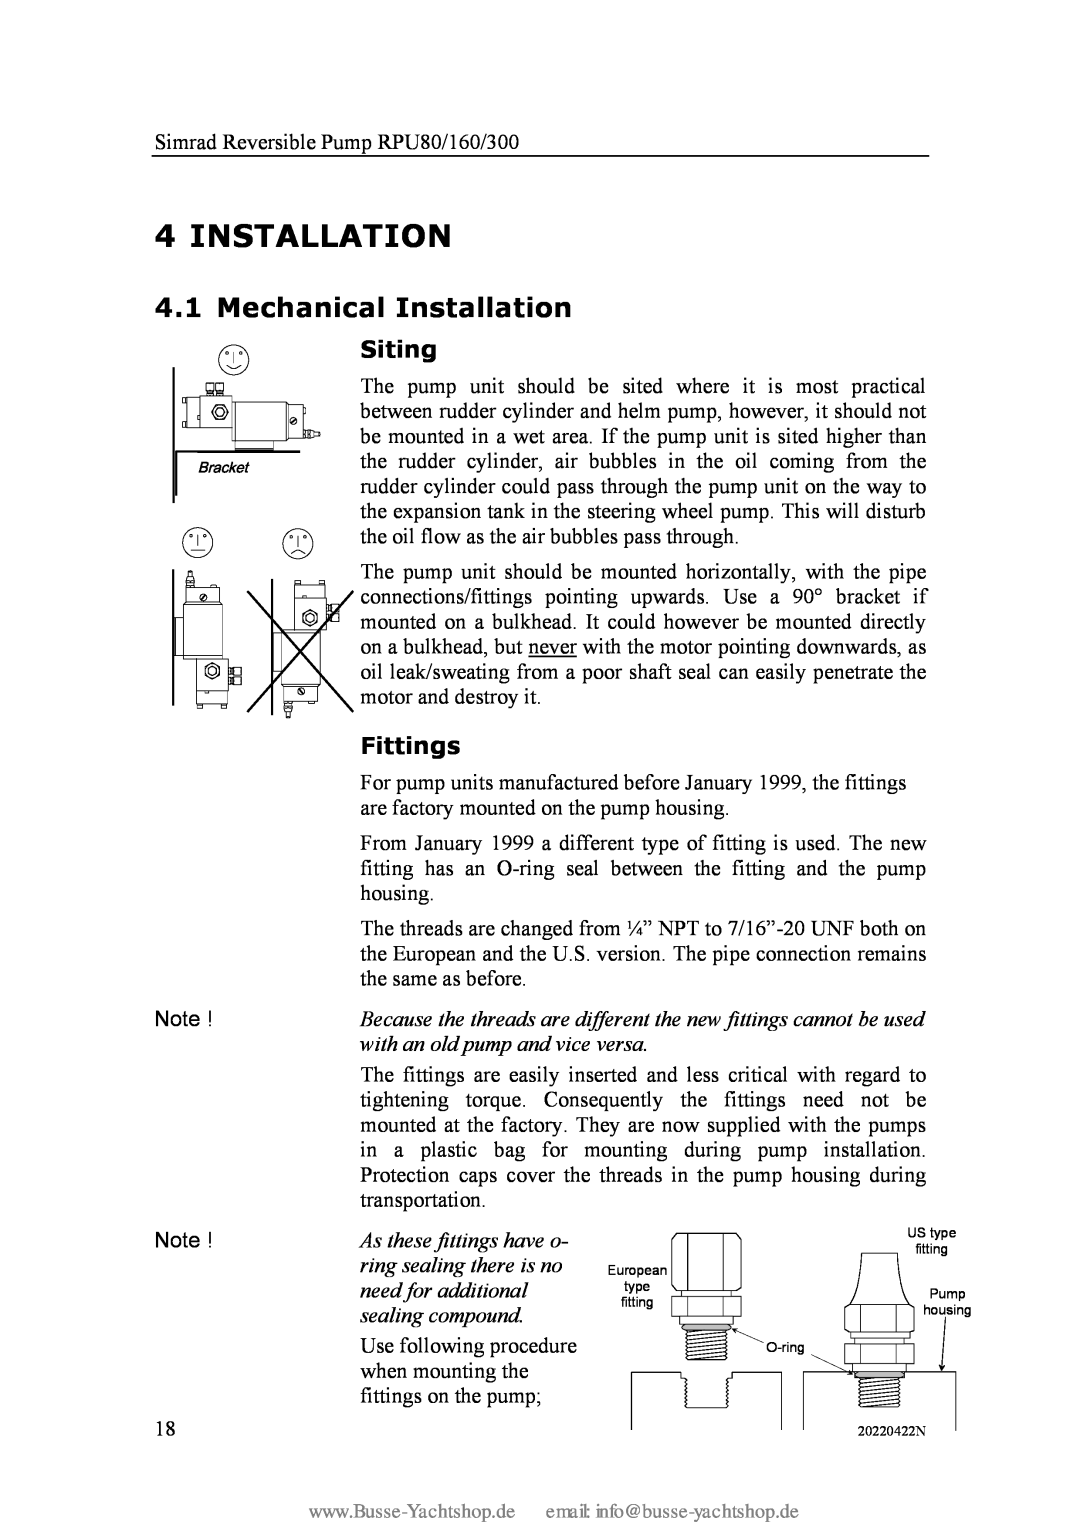 Simran RPU80 instruction manual Mechanical Installation, Siting, Fittings 